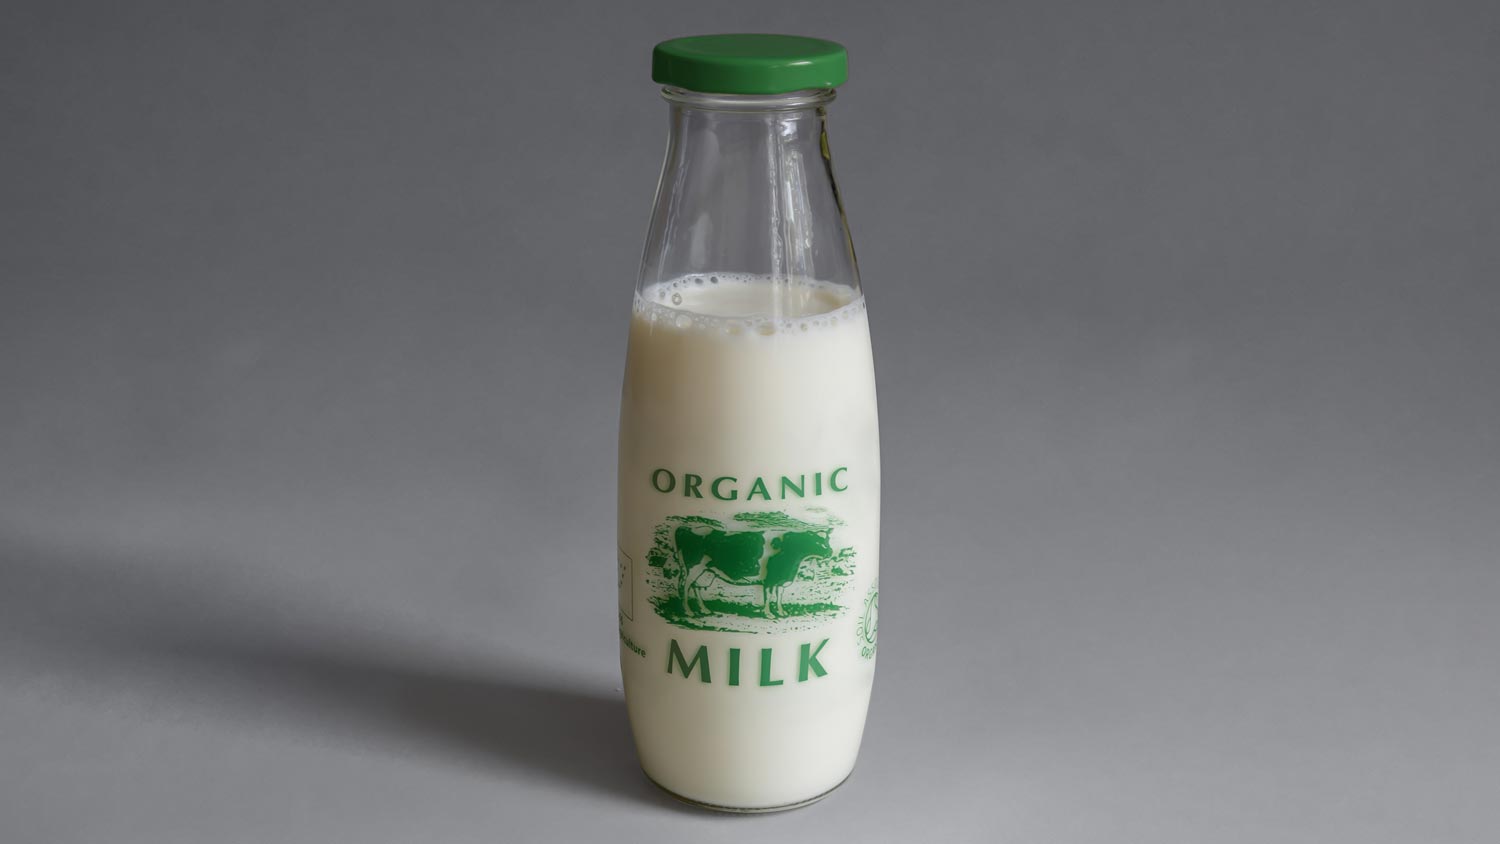 Saintis Membuktikan Susu Yang Dijual Dalam Botol Kaca Lebih Sedap Rasanya